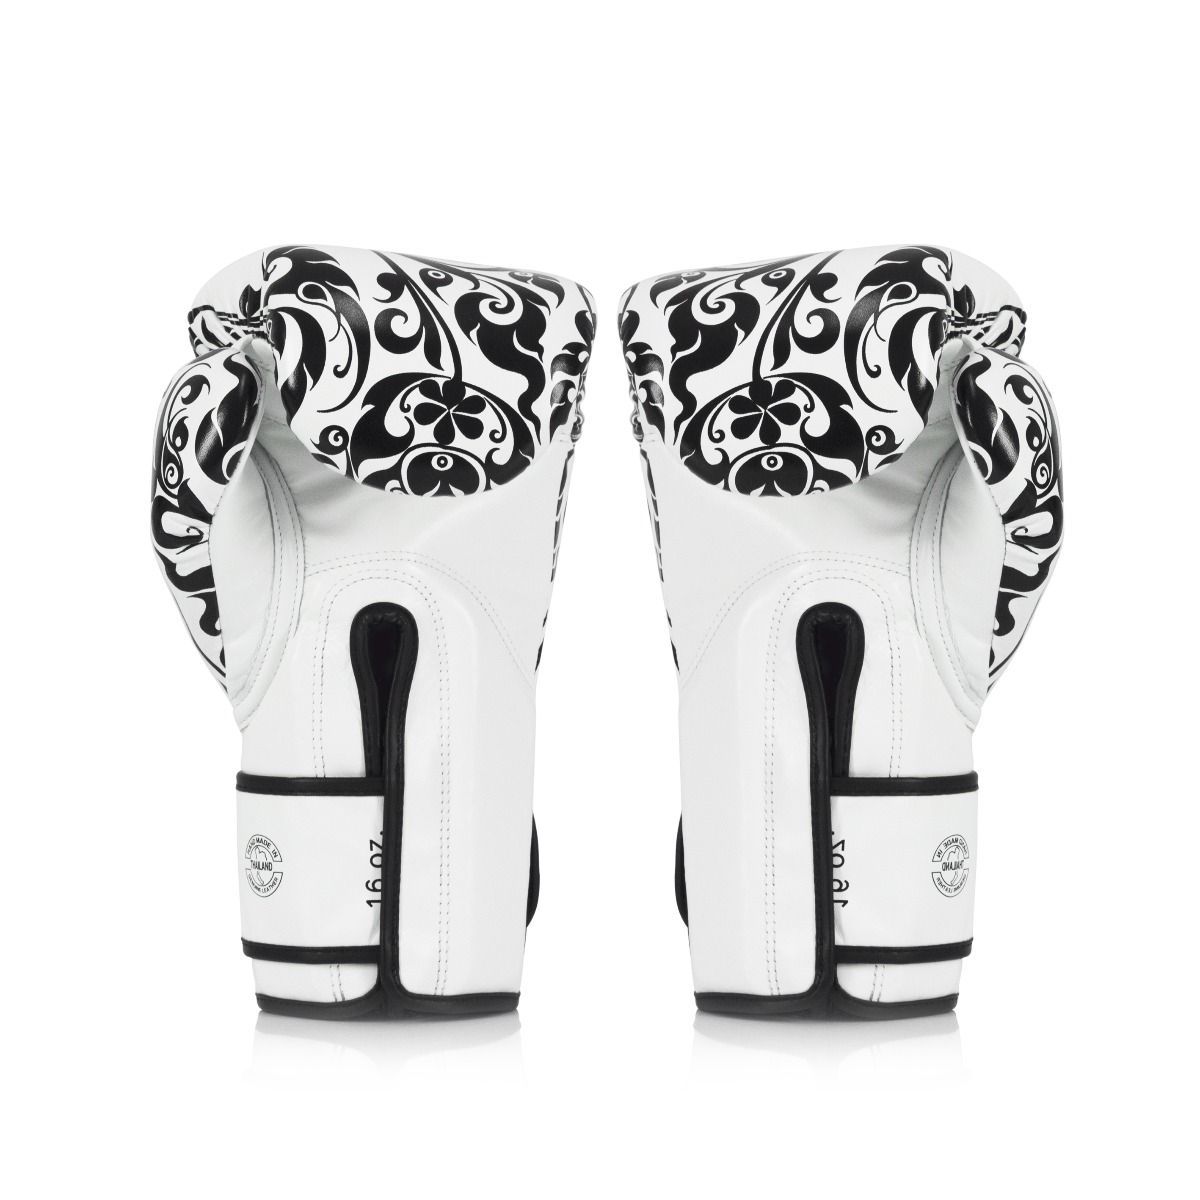 FAIRTEX X Glory Limited Edition Gloves – Velcro [White]